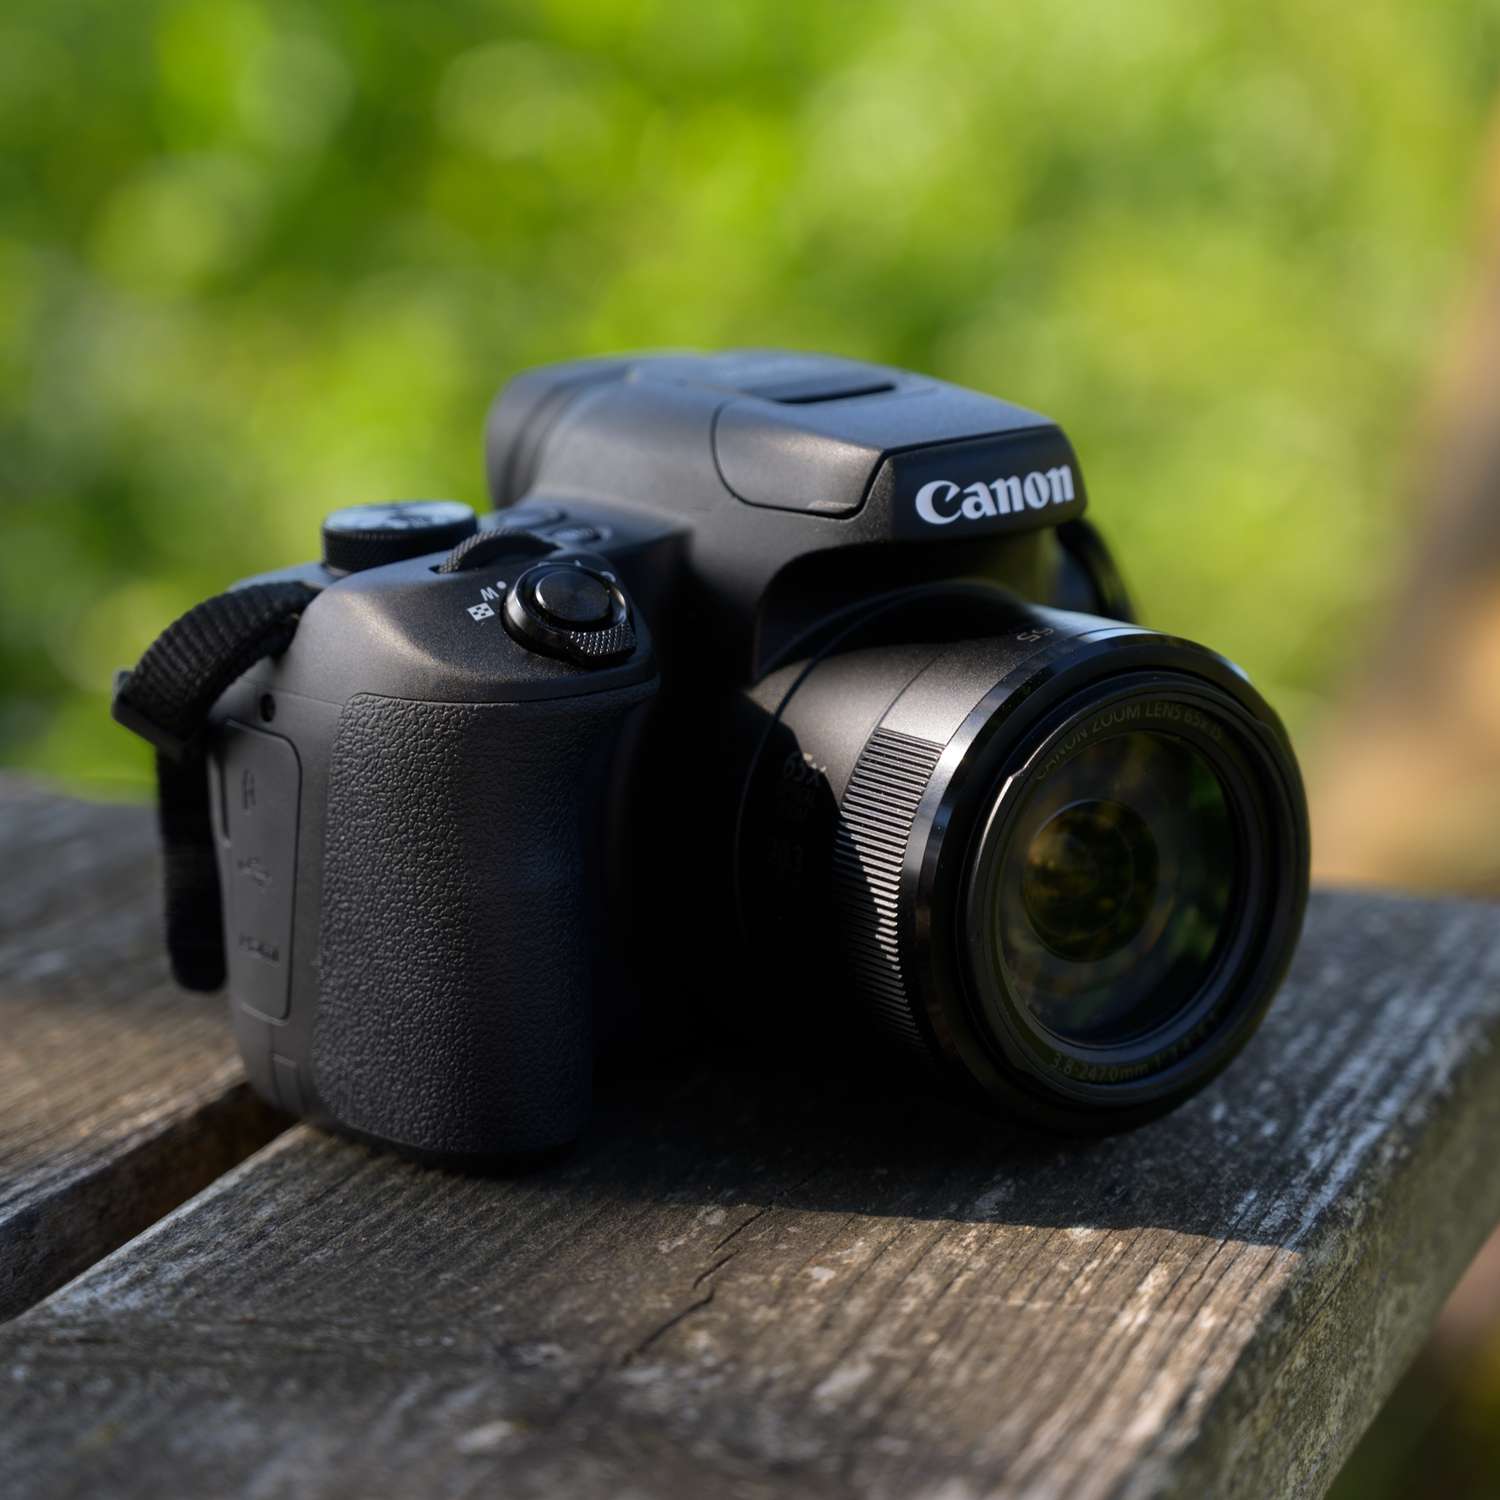 Canon PowerShot SX70 HS: מצלמה קומפקטית עם זום עצום